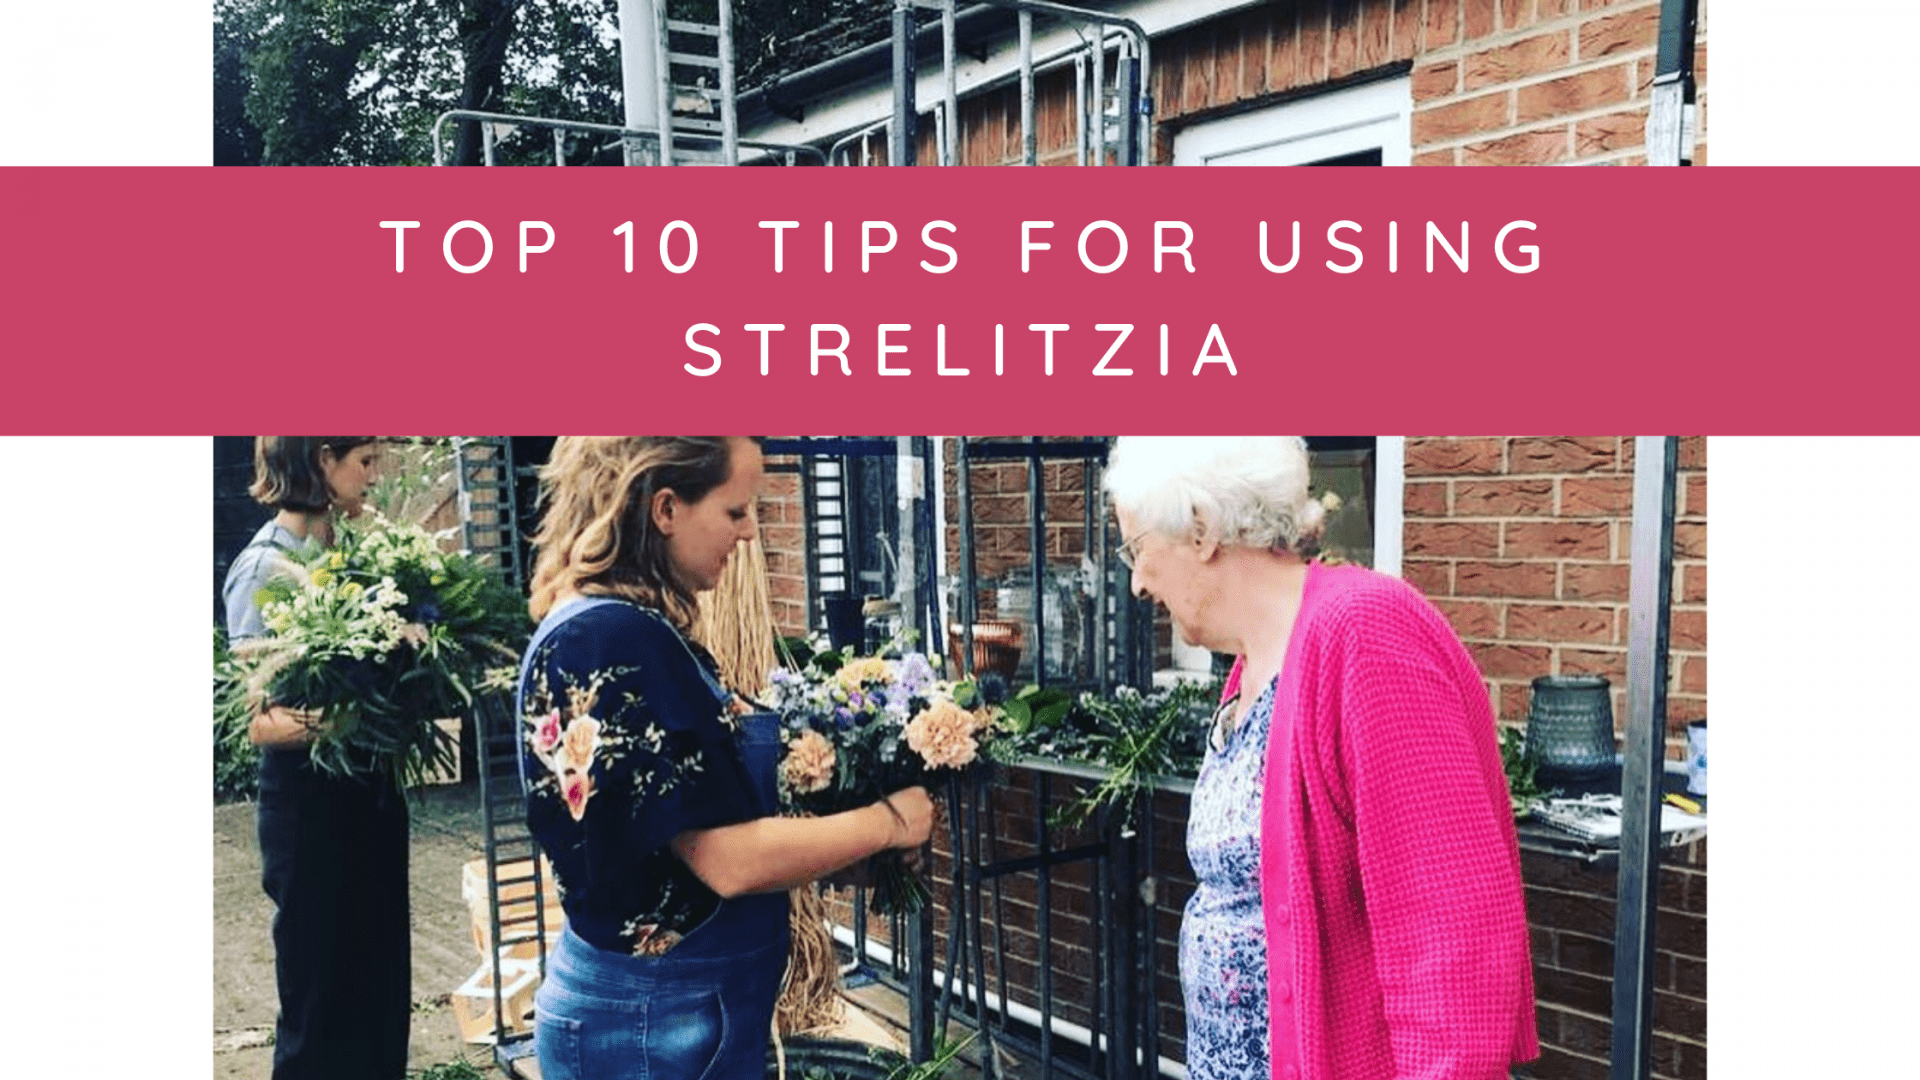 Top 10 tips for using Strelitzia